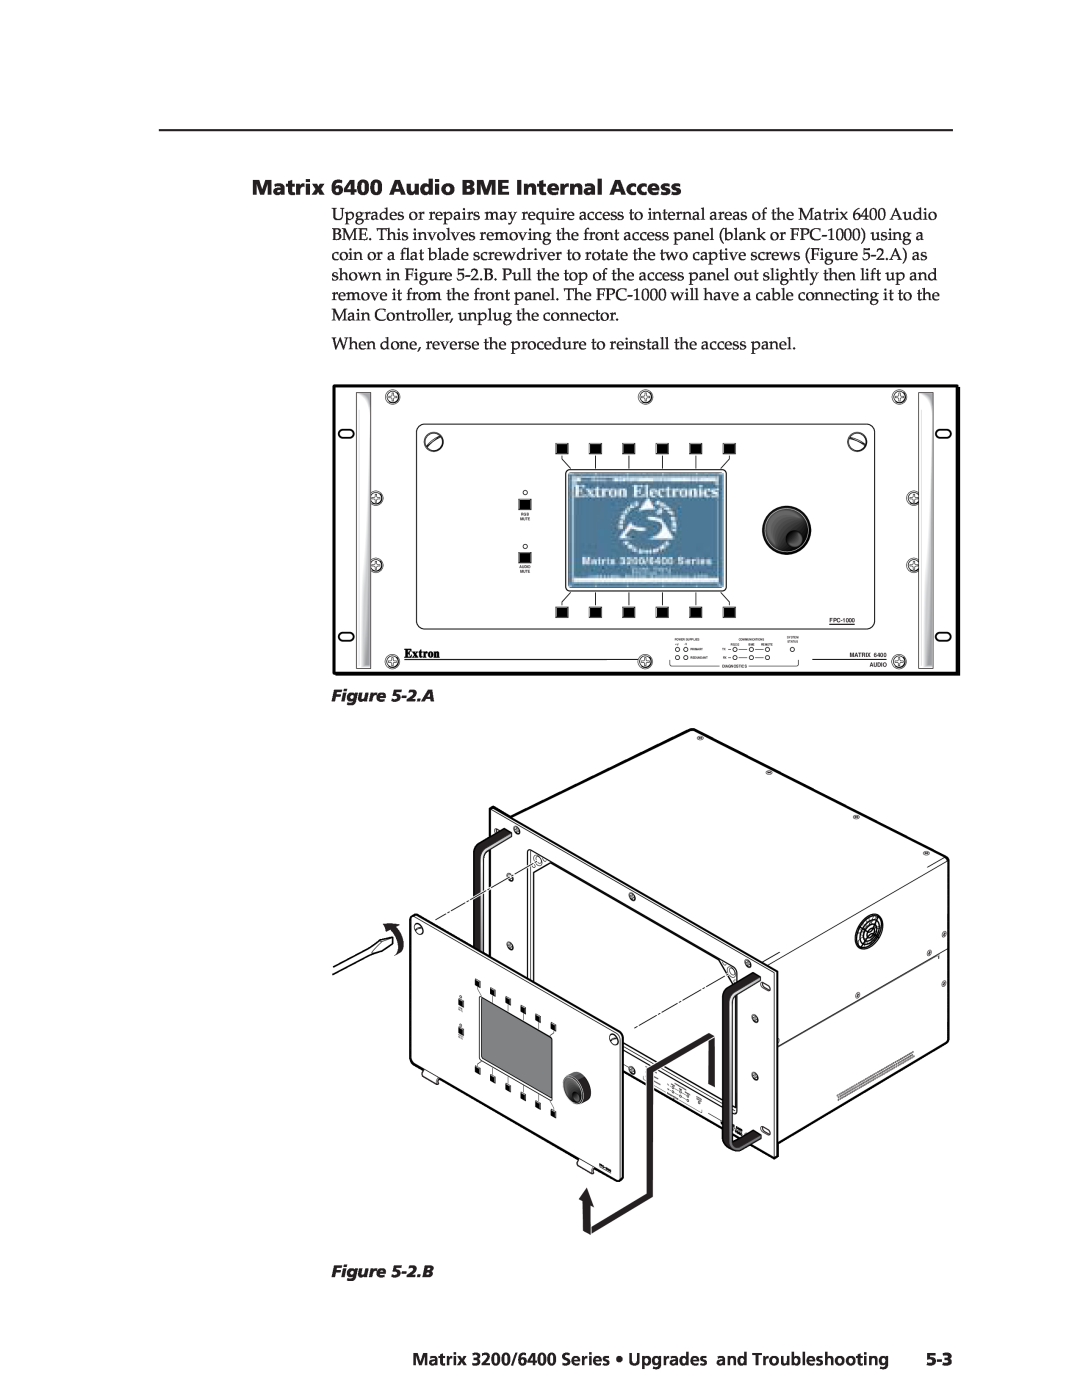 Extron electronic 3200s manual Matrix 6400 Audio BME Internal Access, 2.A, 2.B 